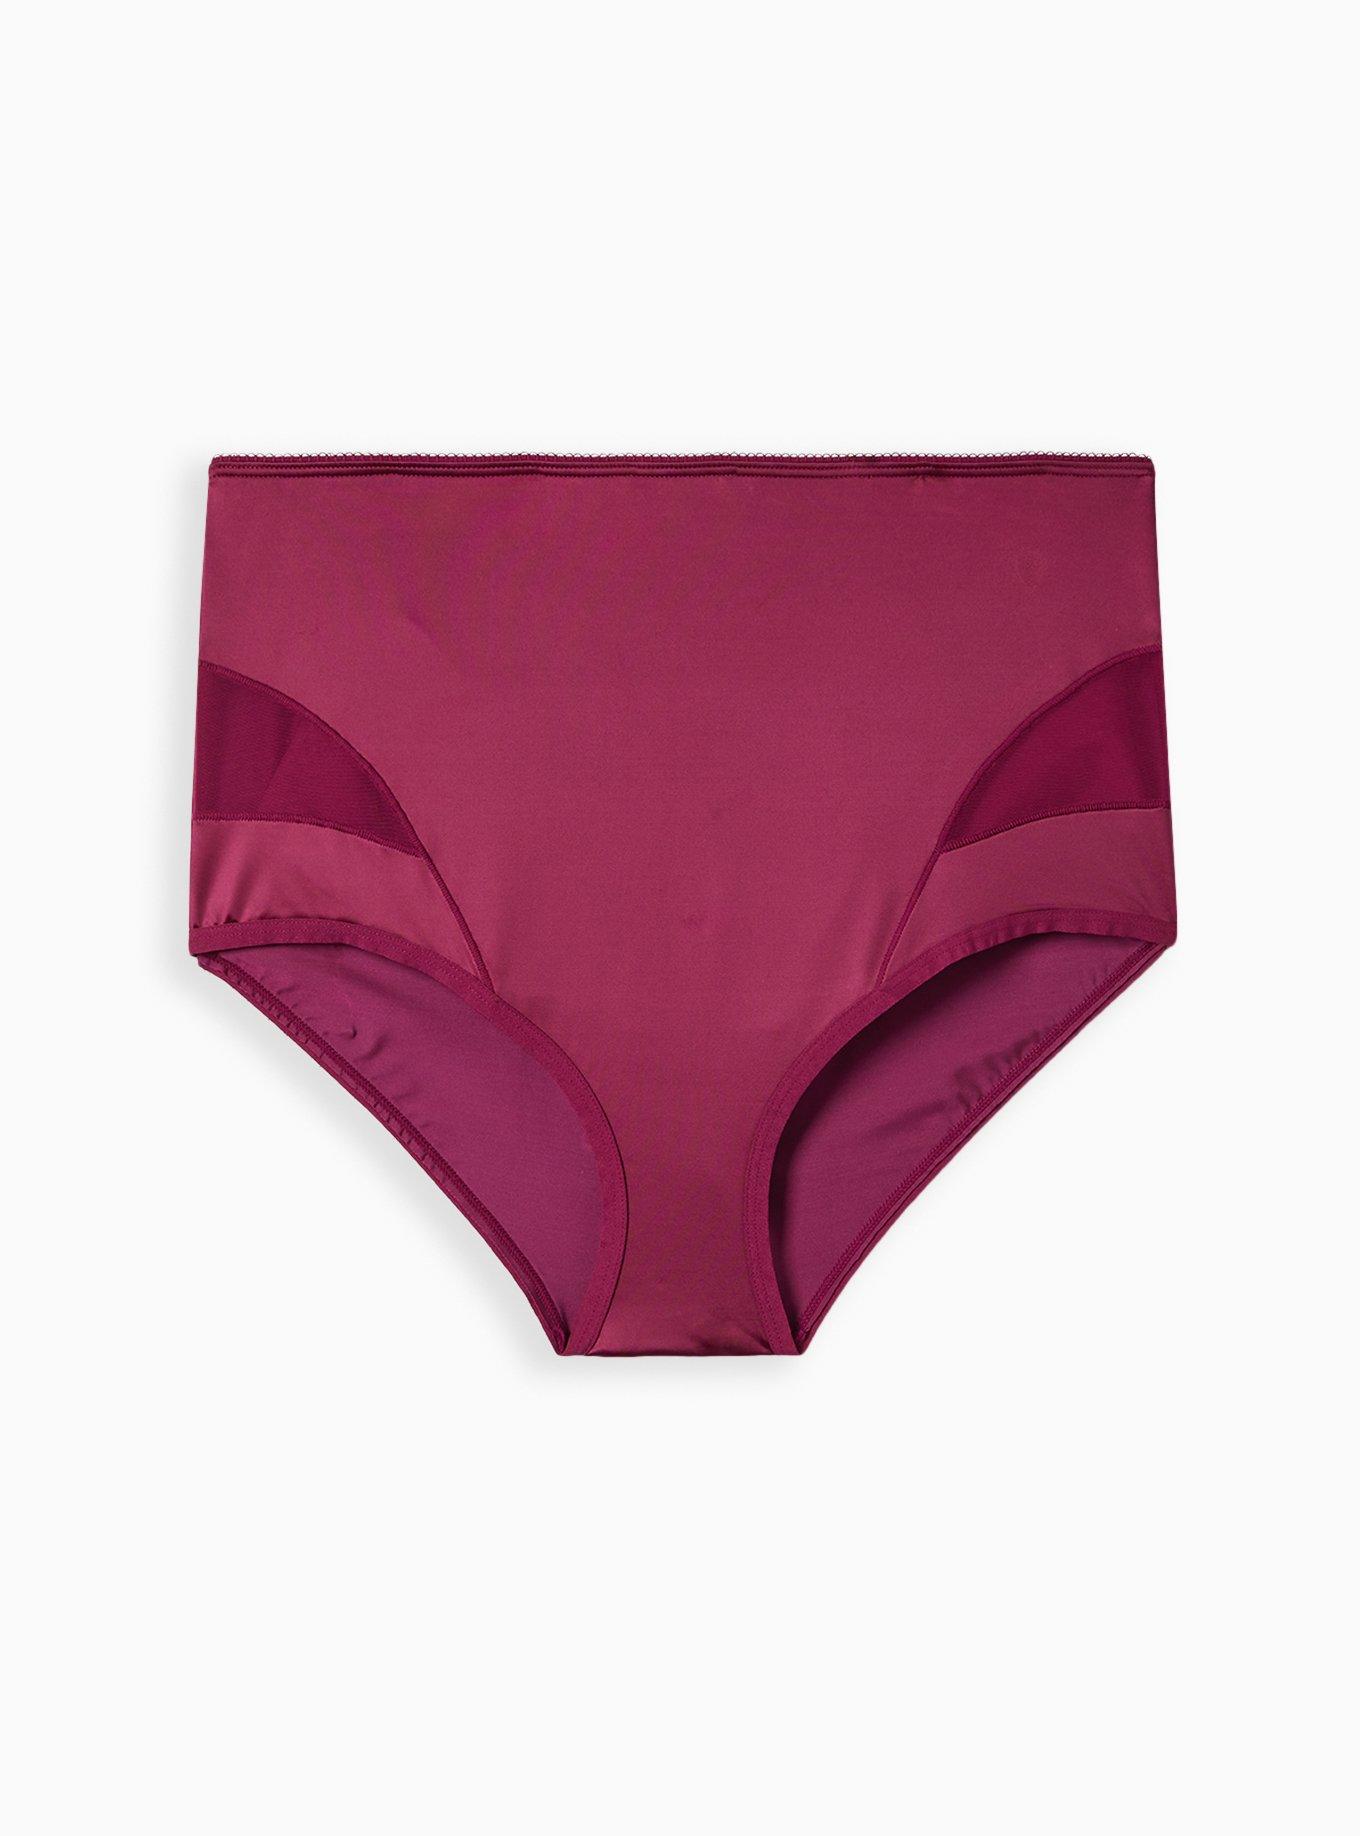 NWT TORRID Sexy Brief Pantie Underwear Sz 0X-1X-2X Pink Floral Print Lace